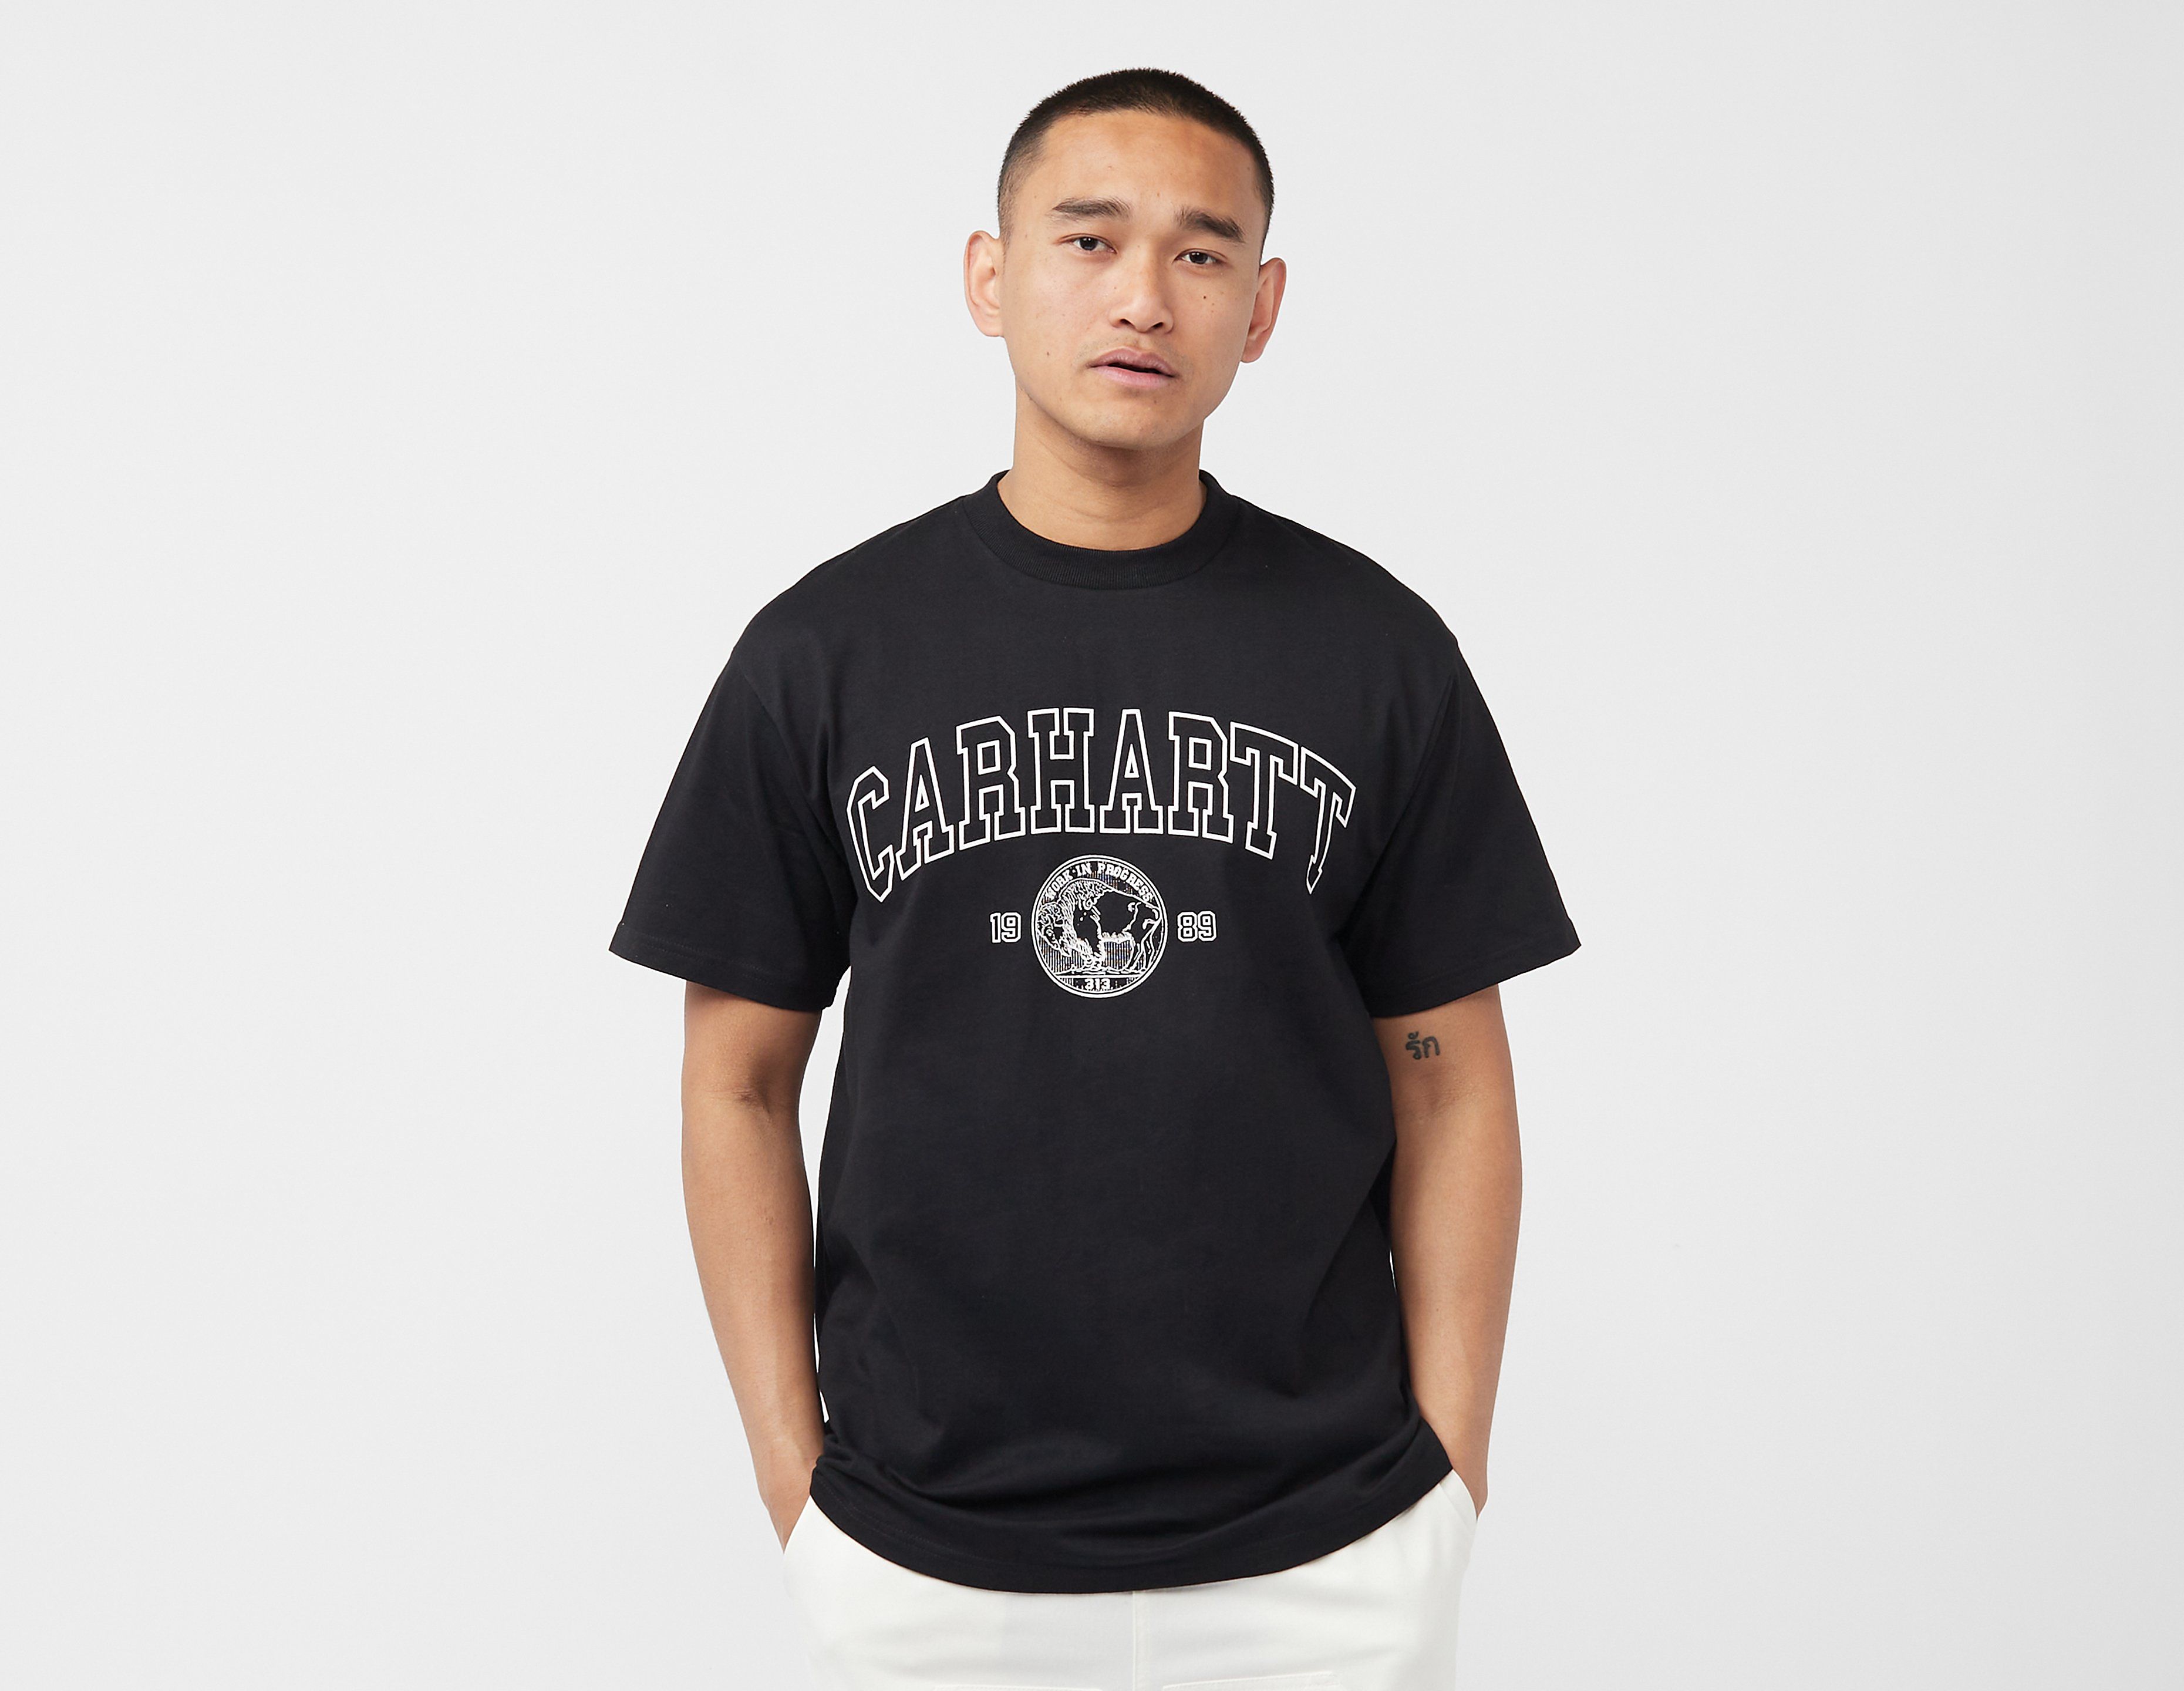 Carhartt Wip Coin T-Shirt